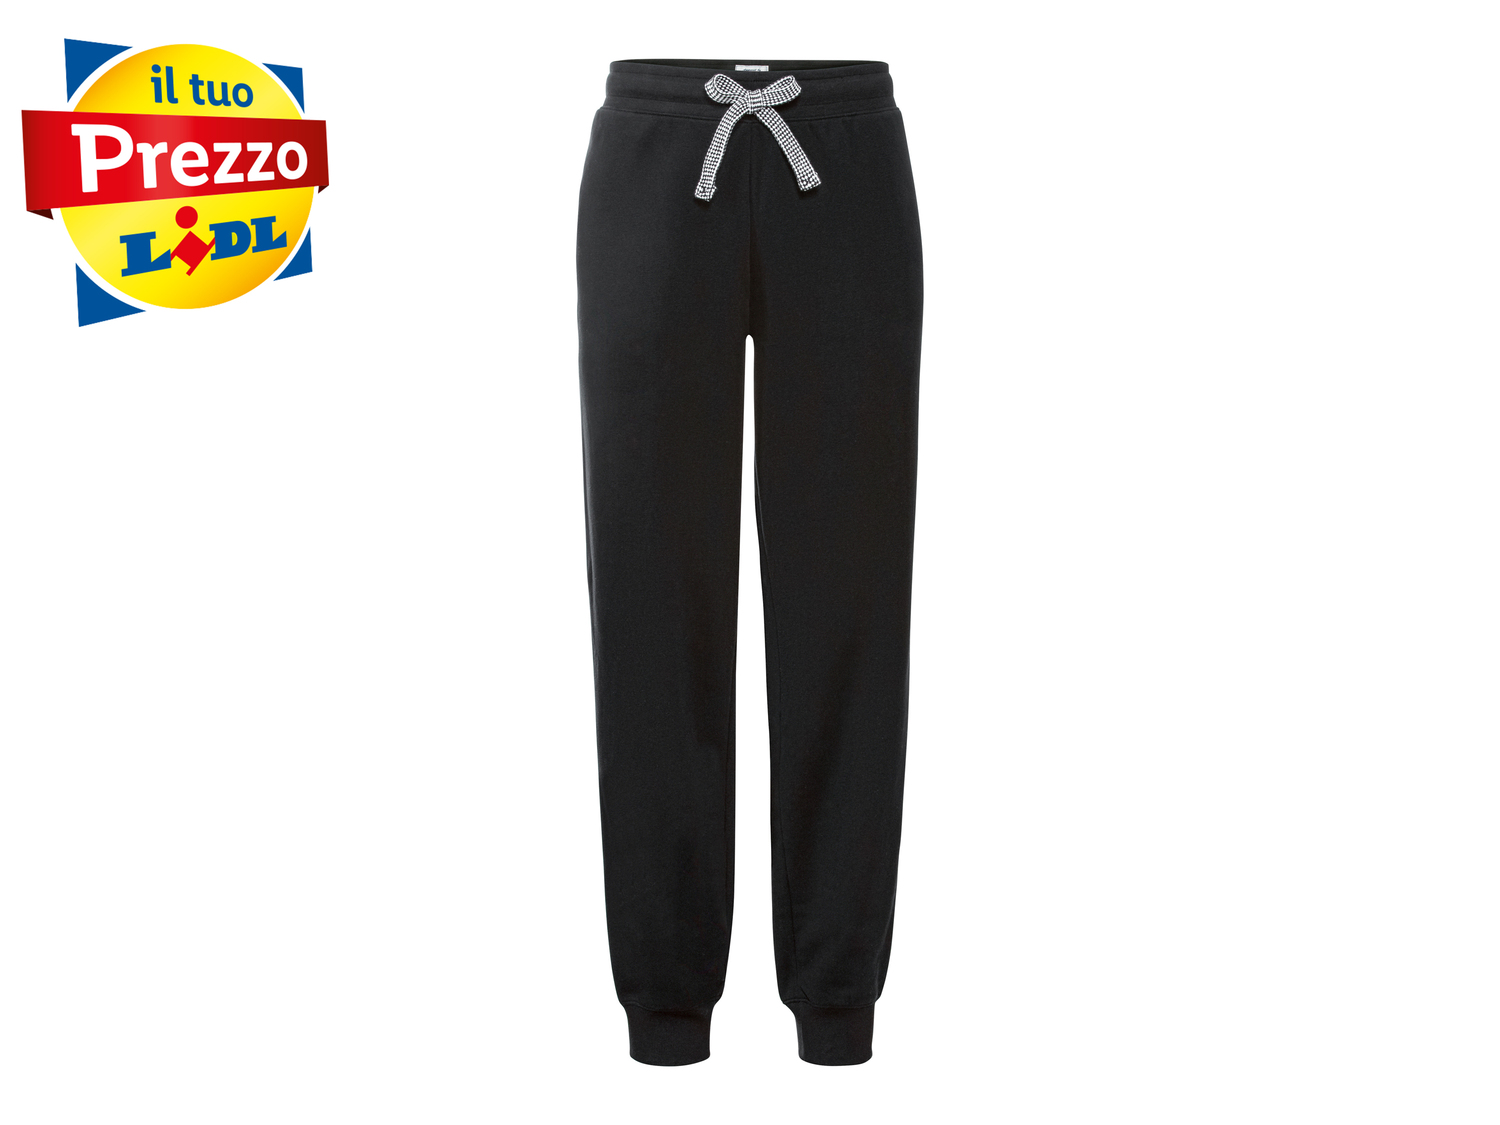 Pantaloni sportivi da uomo Livergy, prezzo 11.99 &#8364; 
Misure: S-XL
Taglie ...